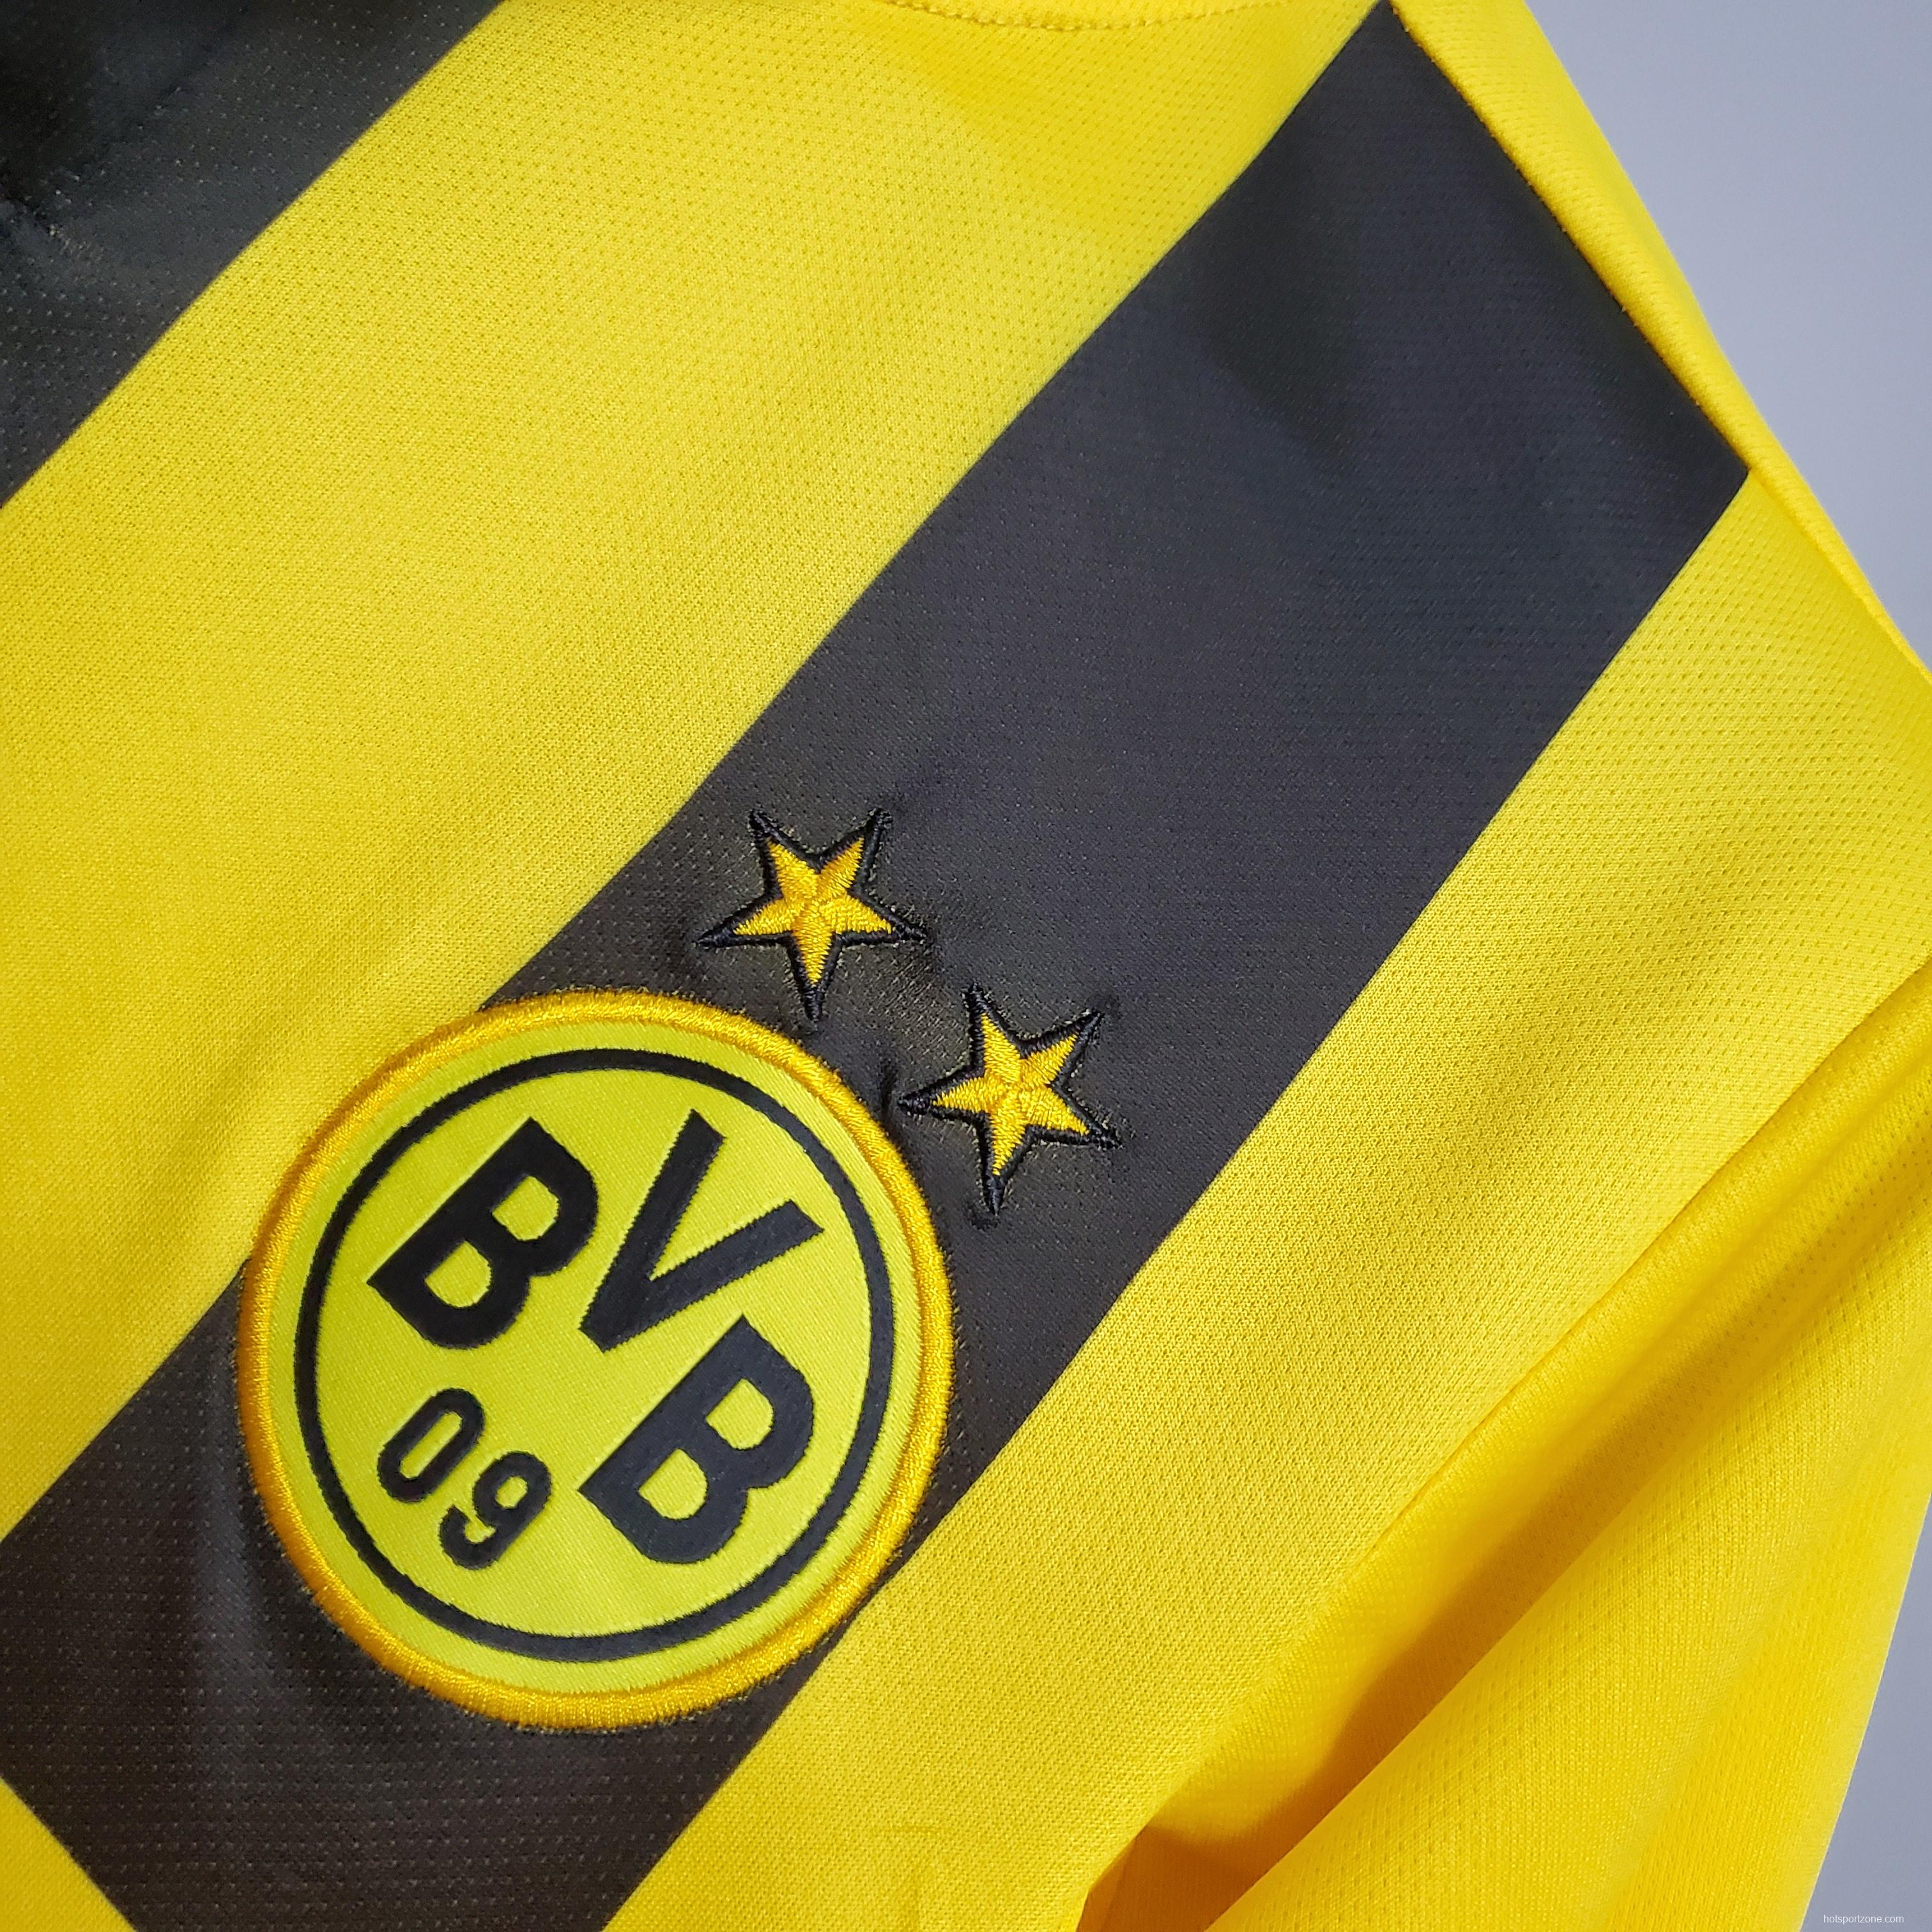 Retro Borussia Dortmund 12/13 home Soccer Jersey